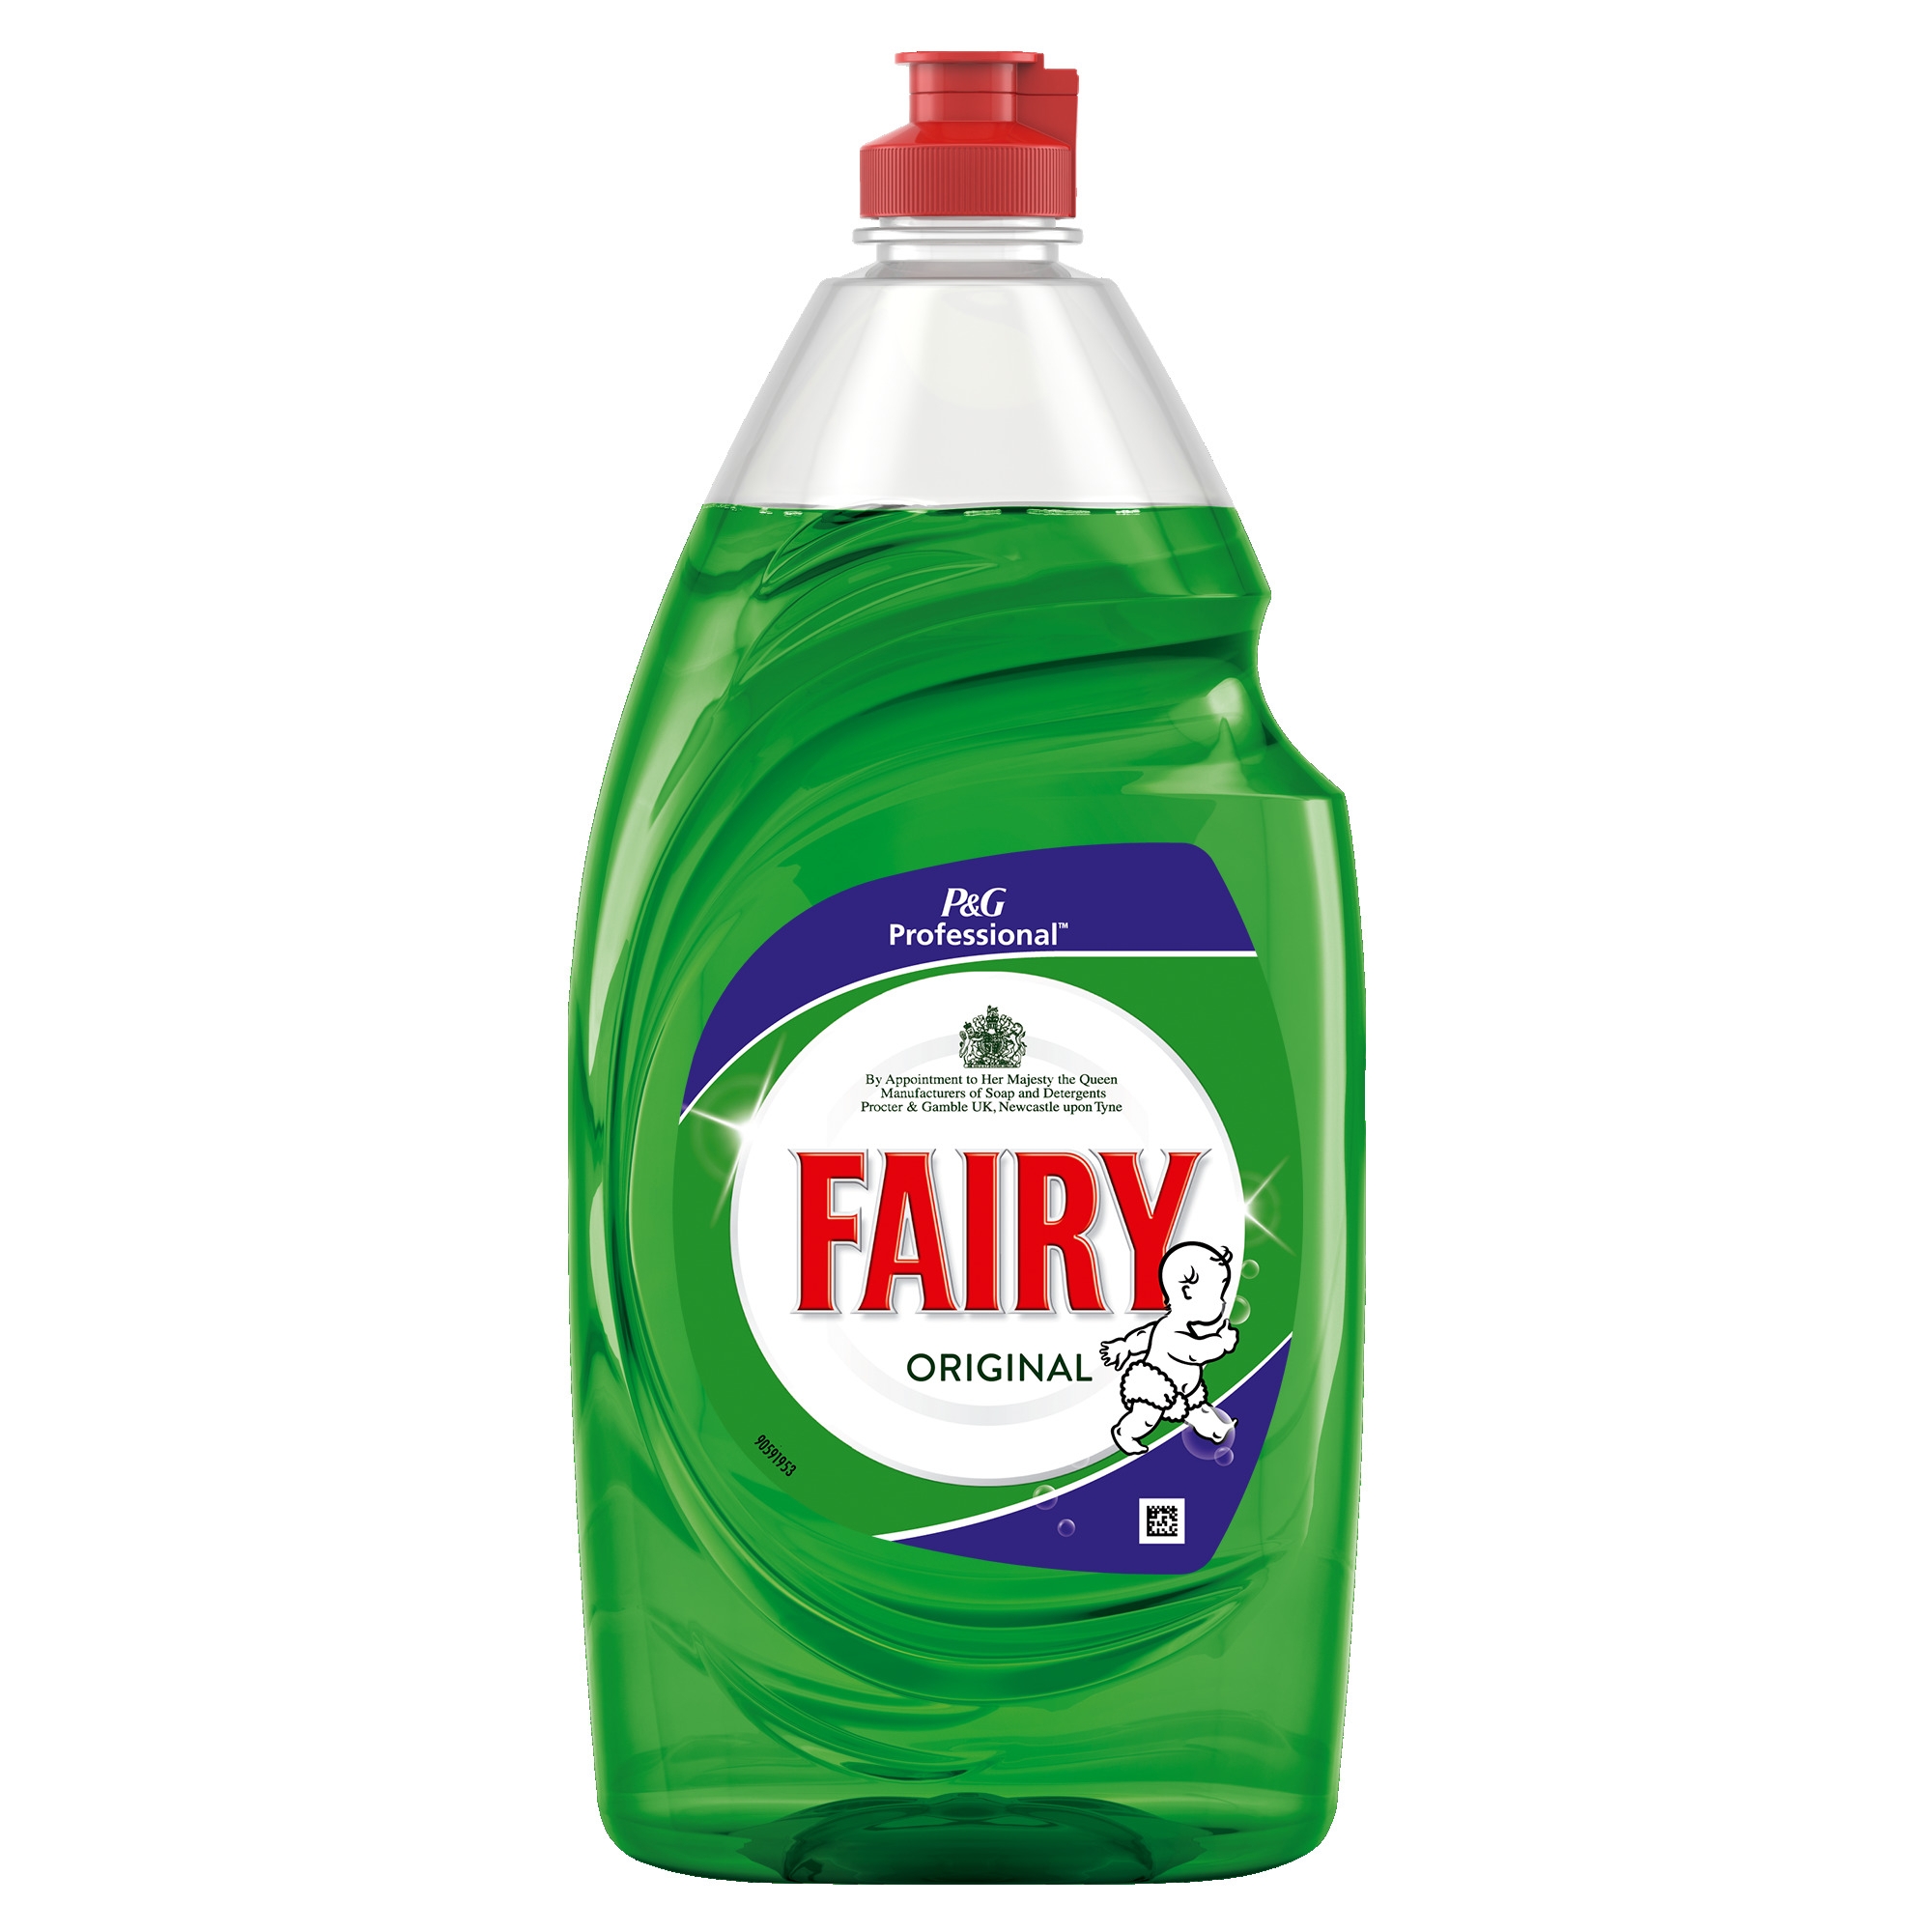 P & G Professional Fairy Washing Up Liquid - 6 x 900ml